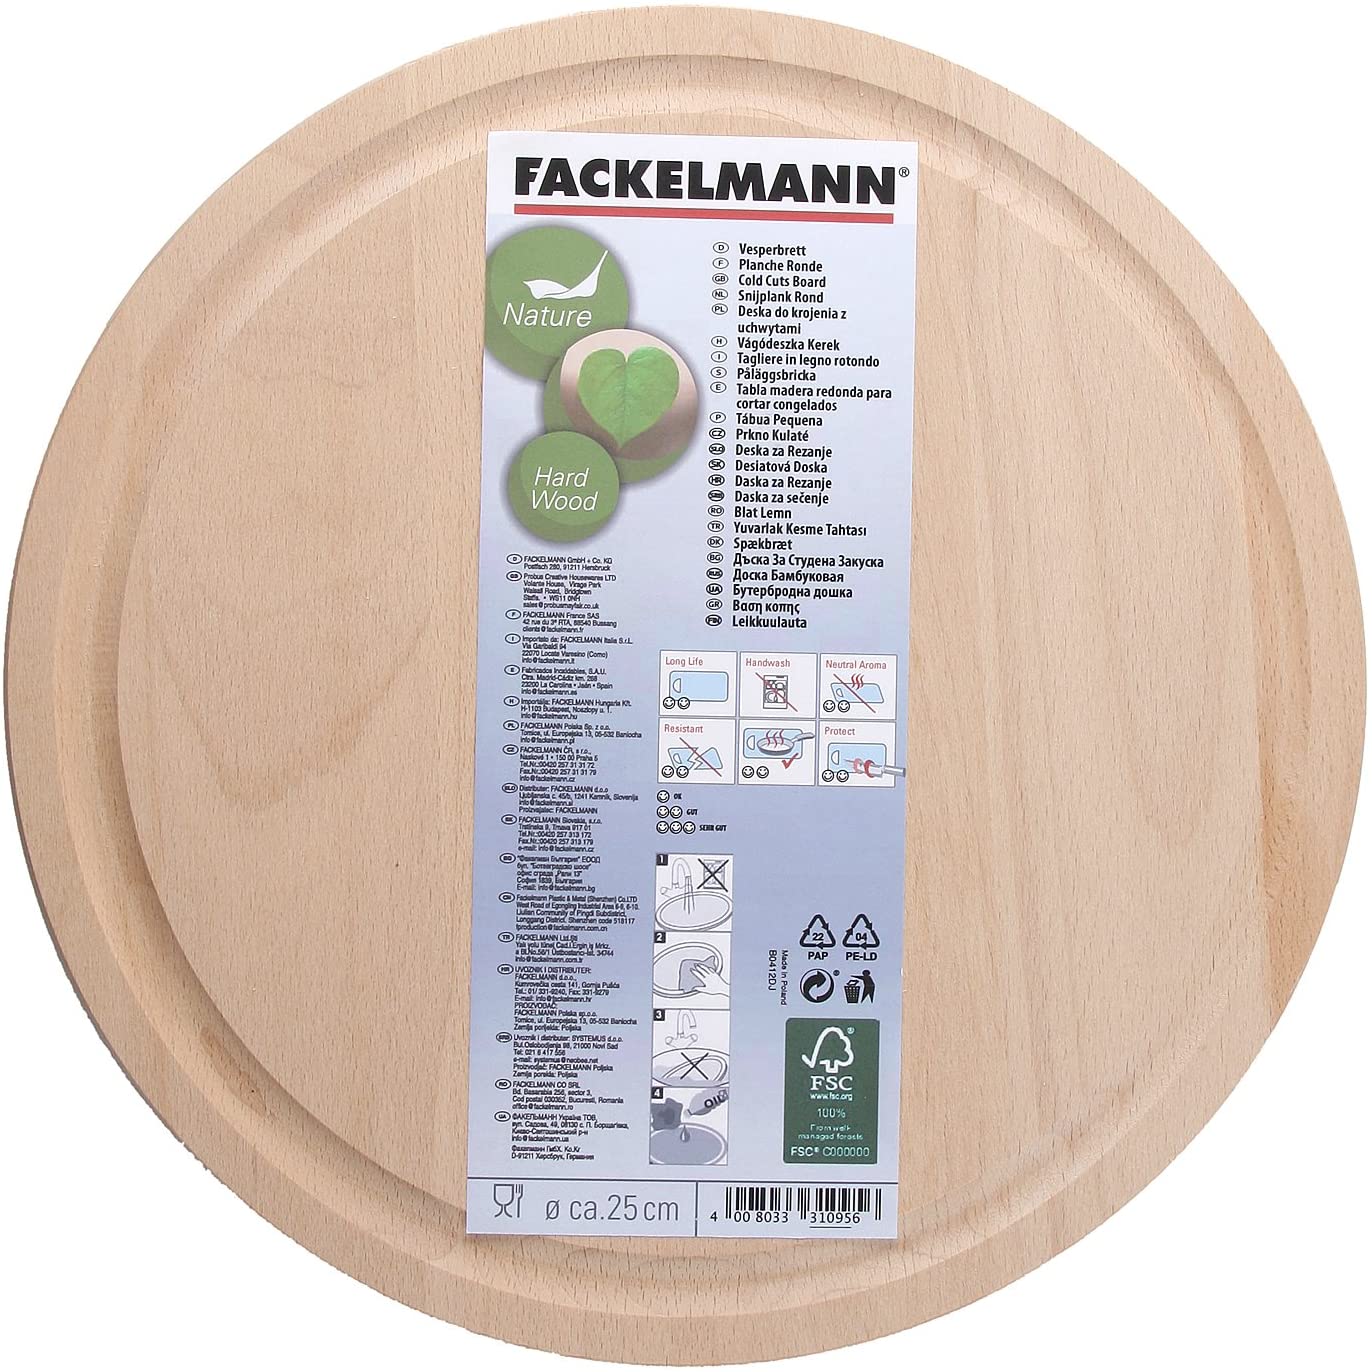 Fackelmann Cold Cuts Board